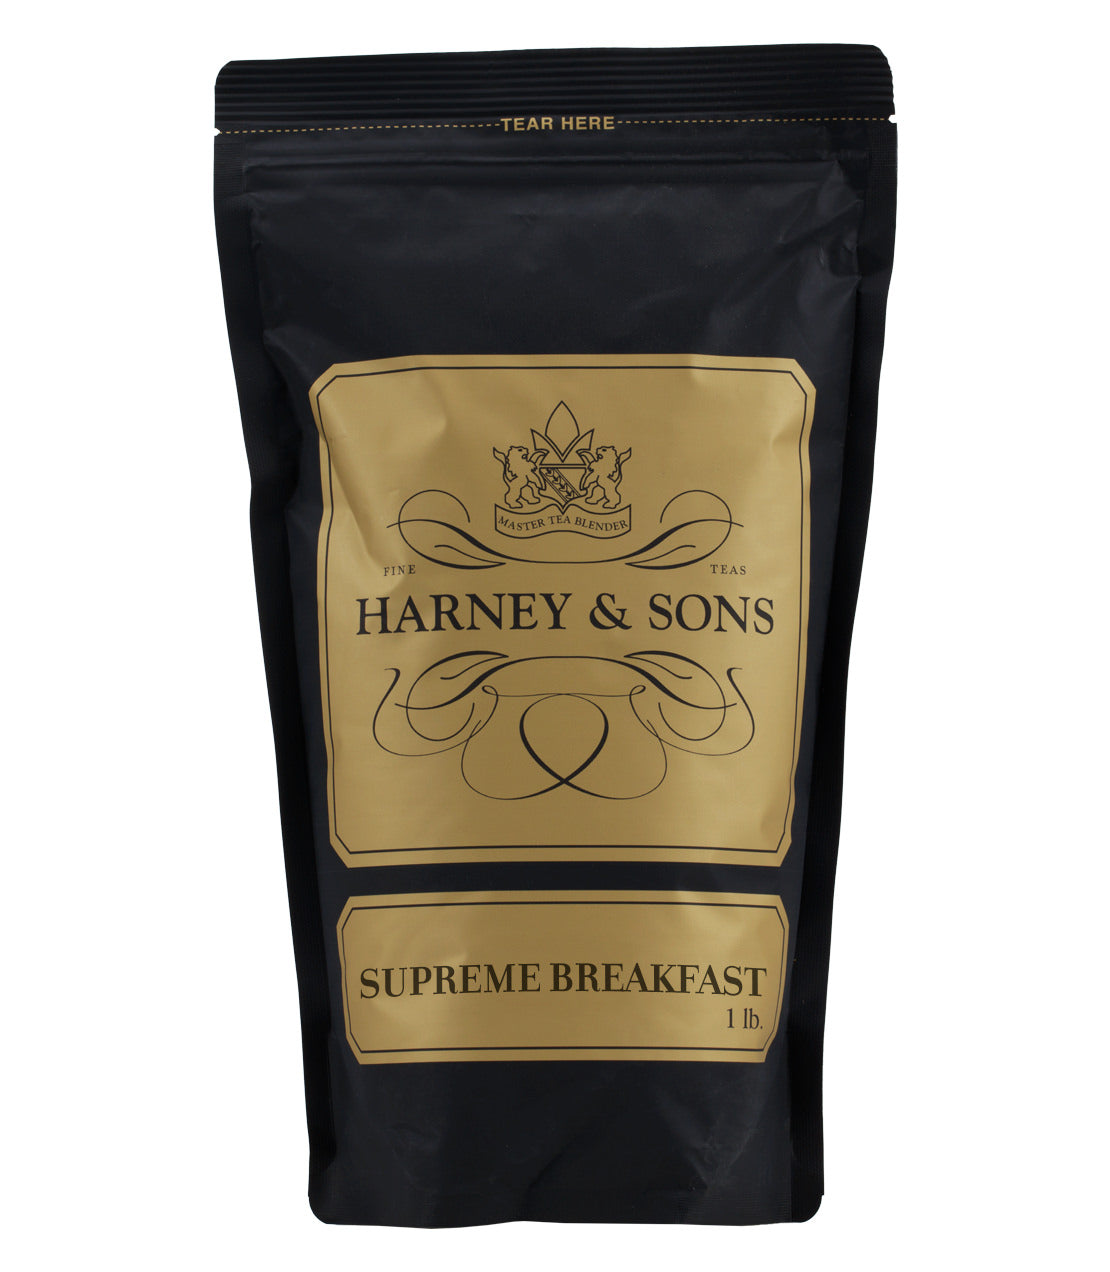 Supreme Breakfast - Loose 1 lb. Bag - Harney & Sons Fine Teas